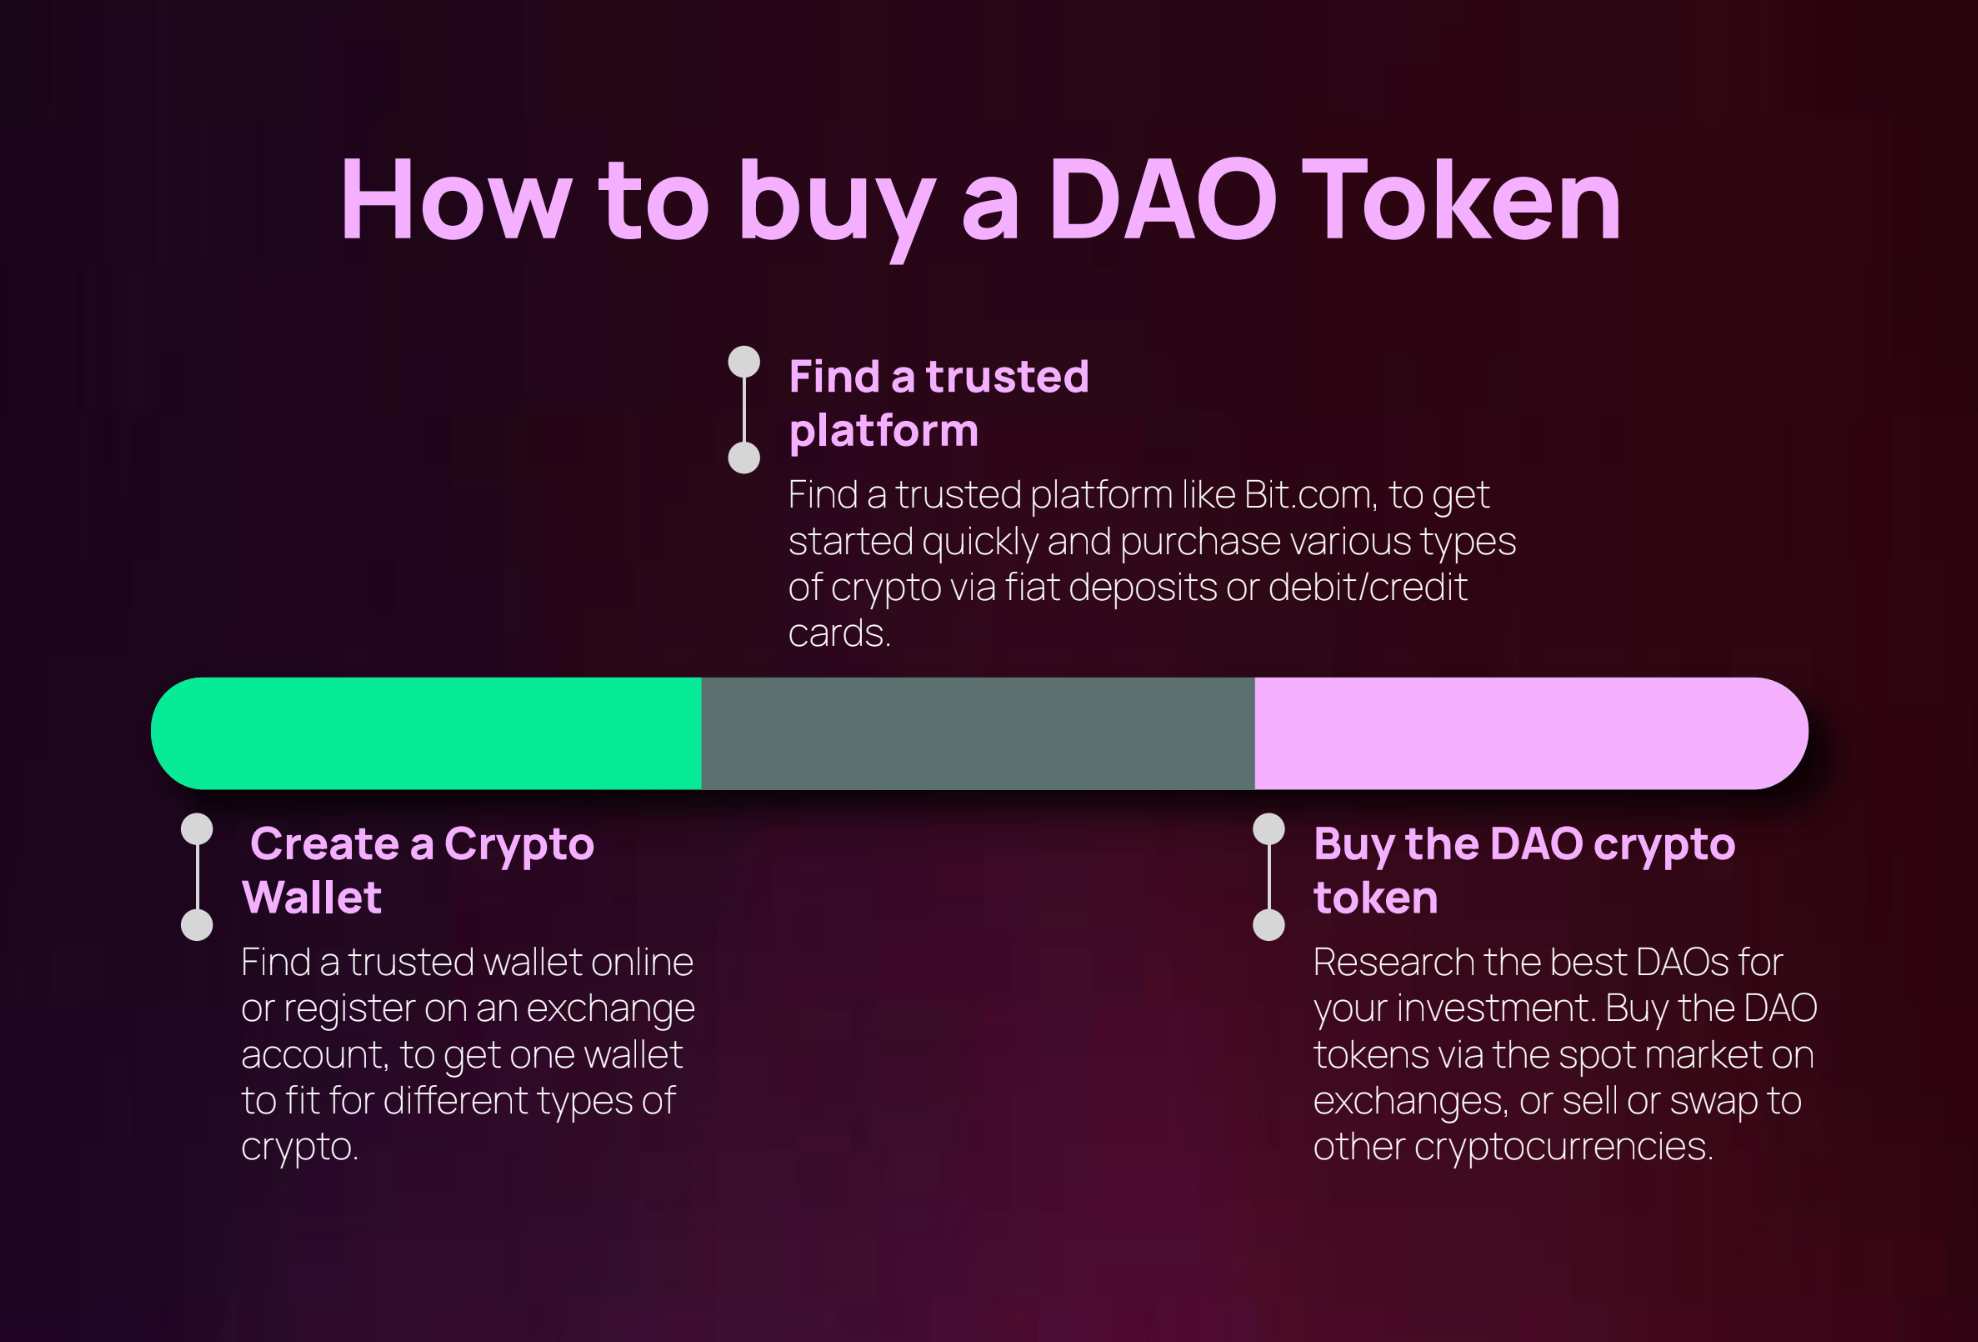 How to buy DAO crypto tokens?